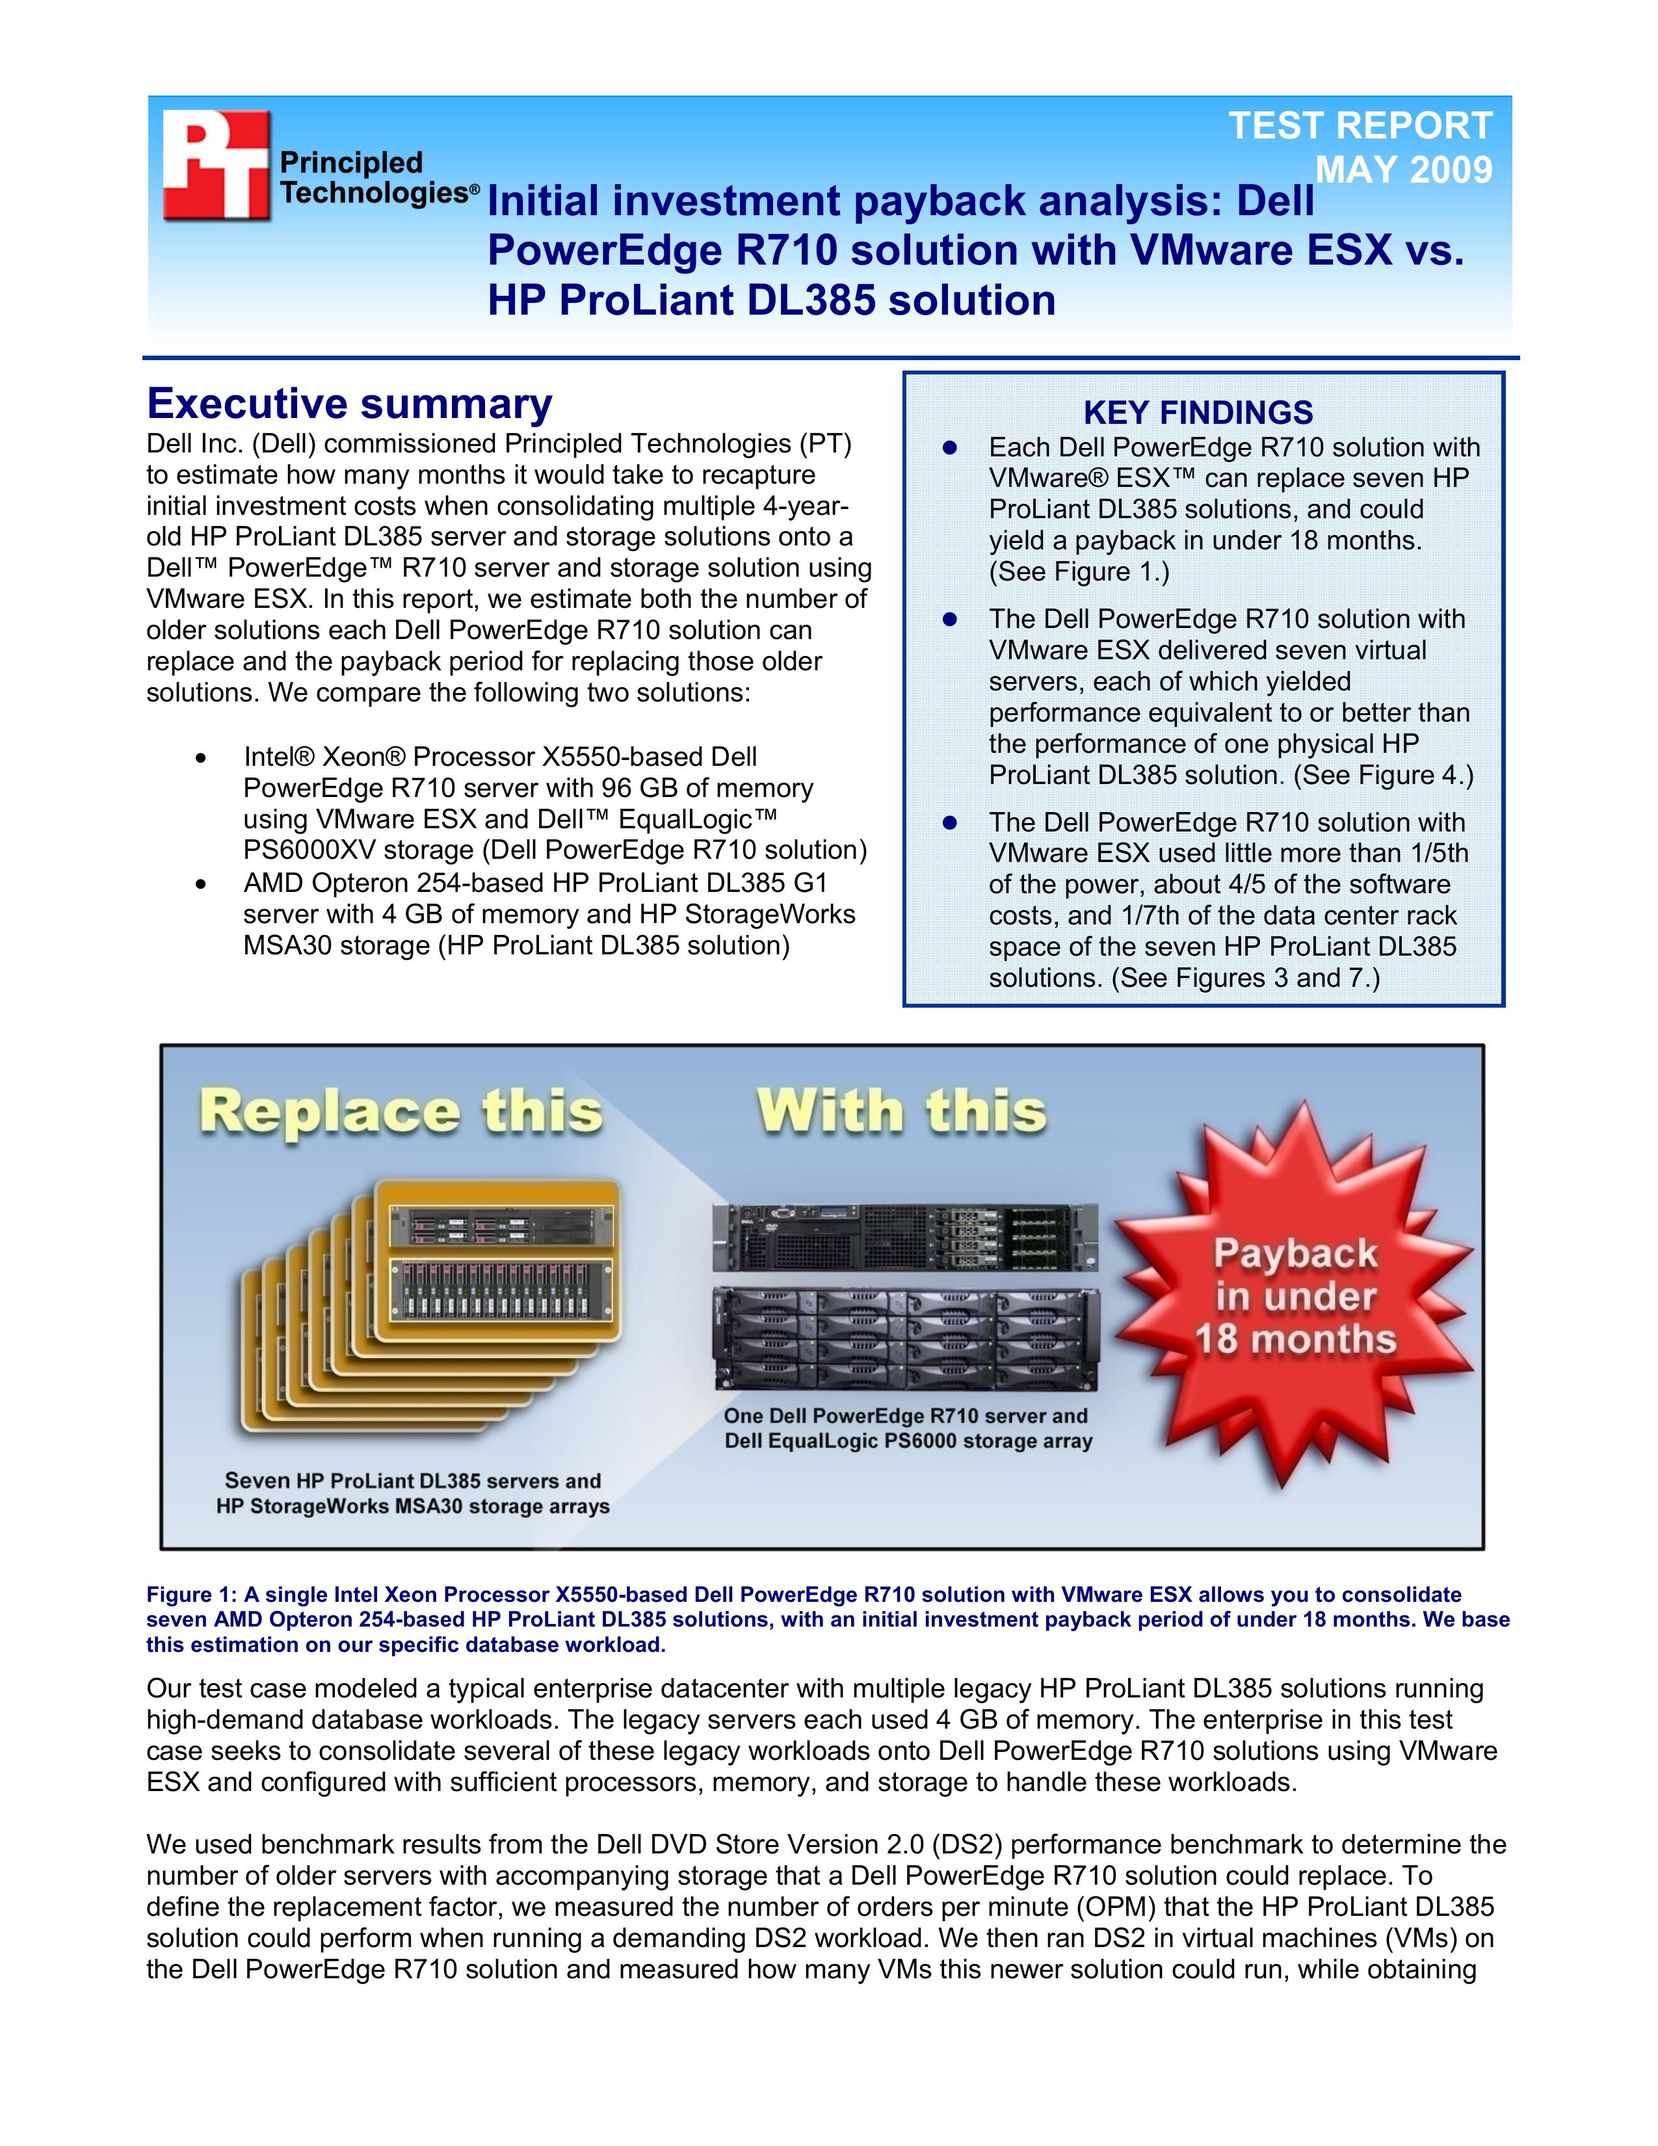 Dell DL385 Server User Manual